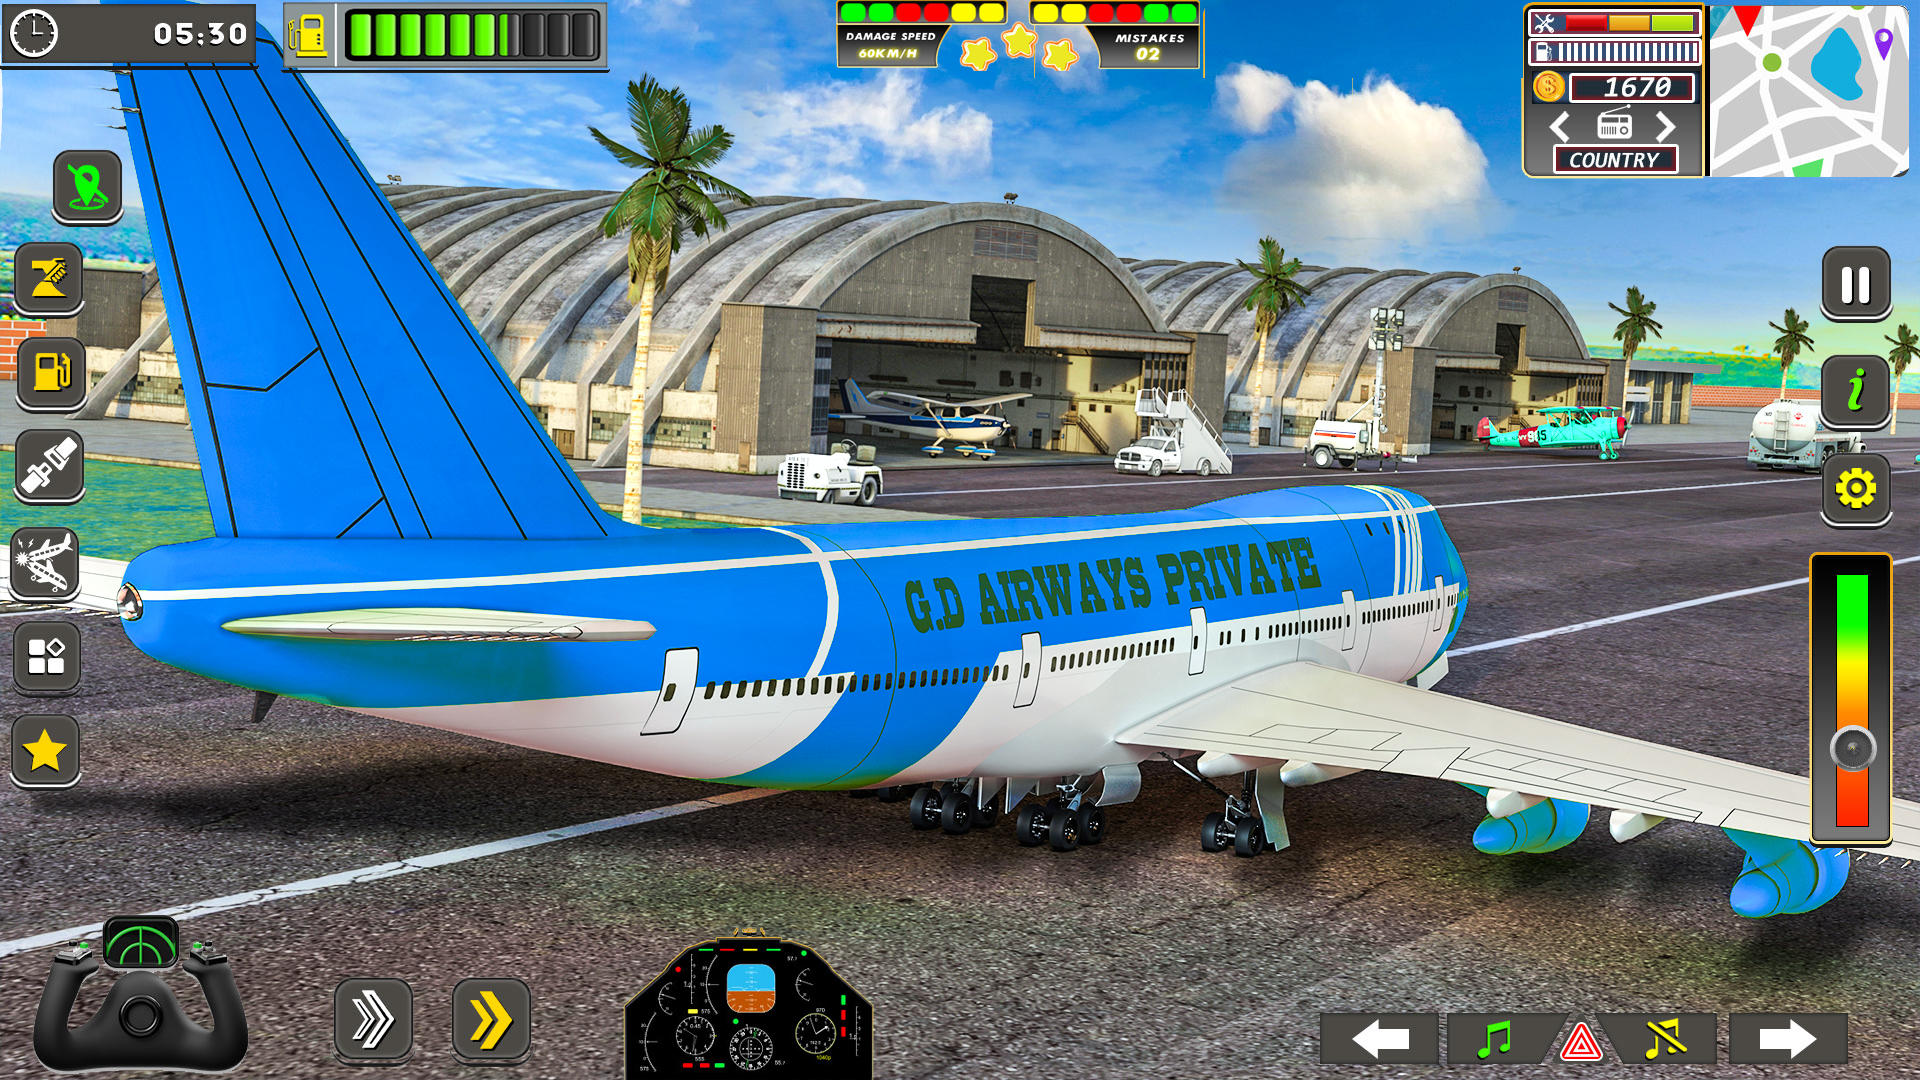 Screenshot 1 of Real Flight Sim Airplane Games 0.28